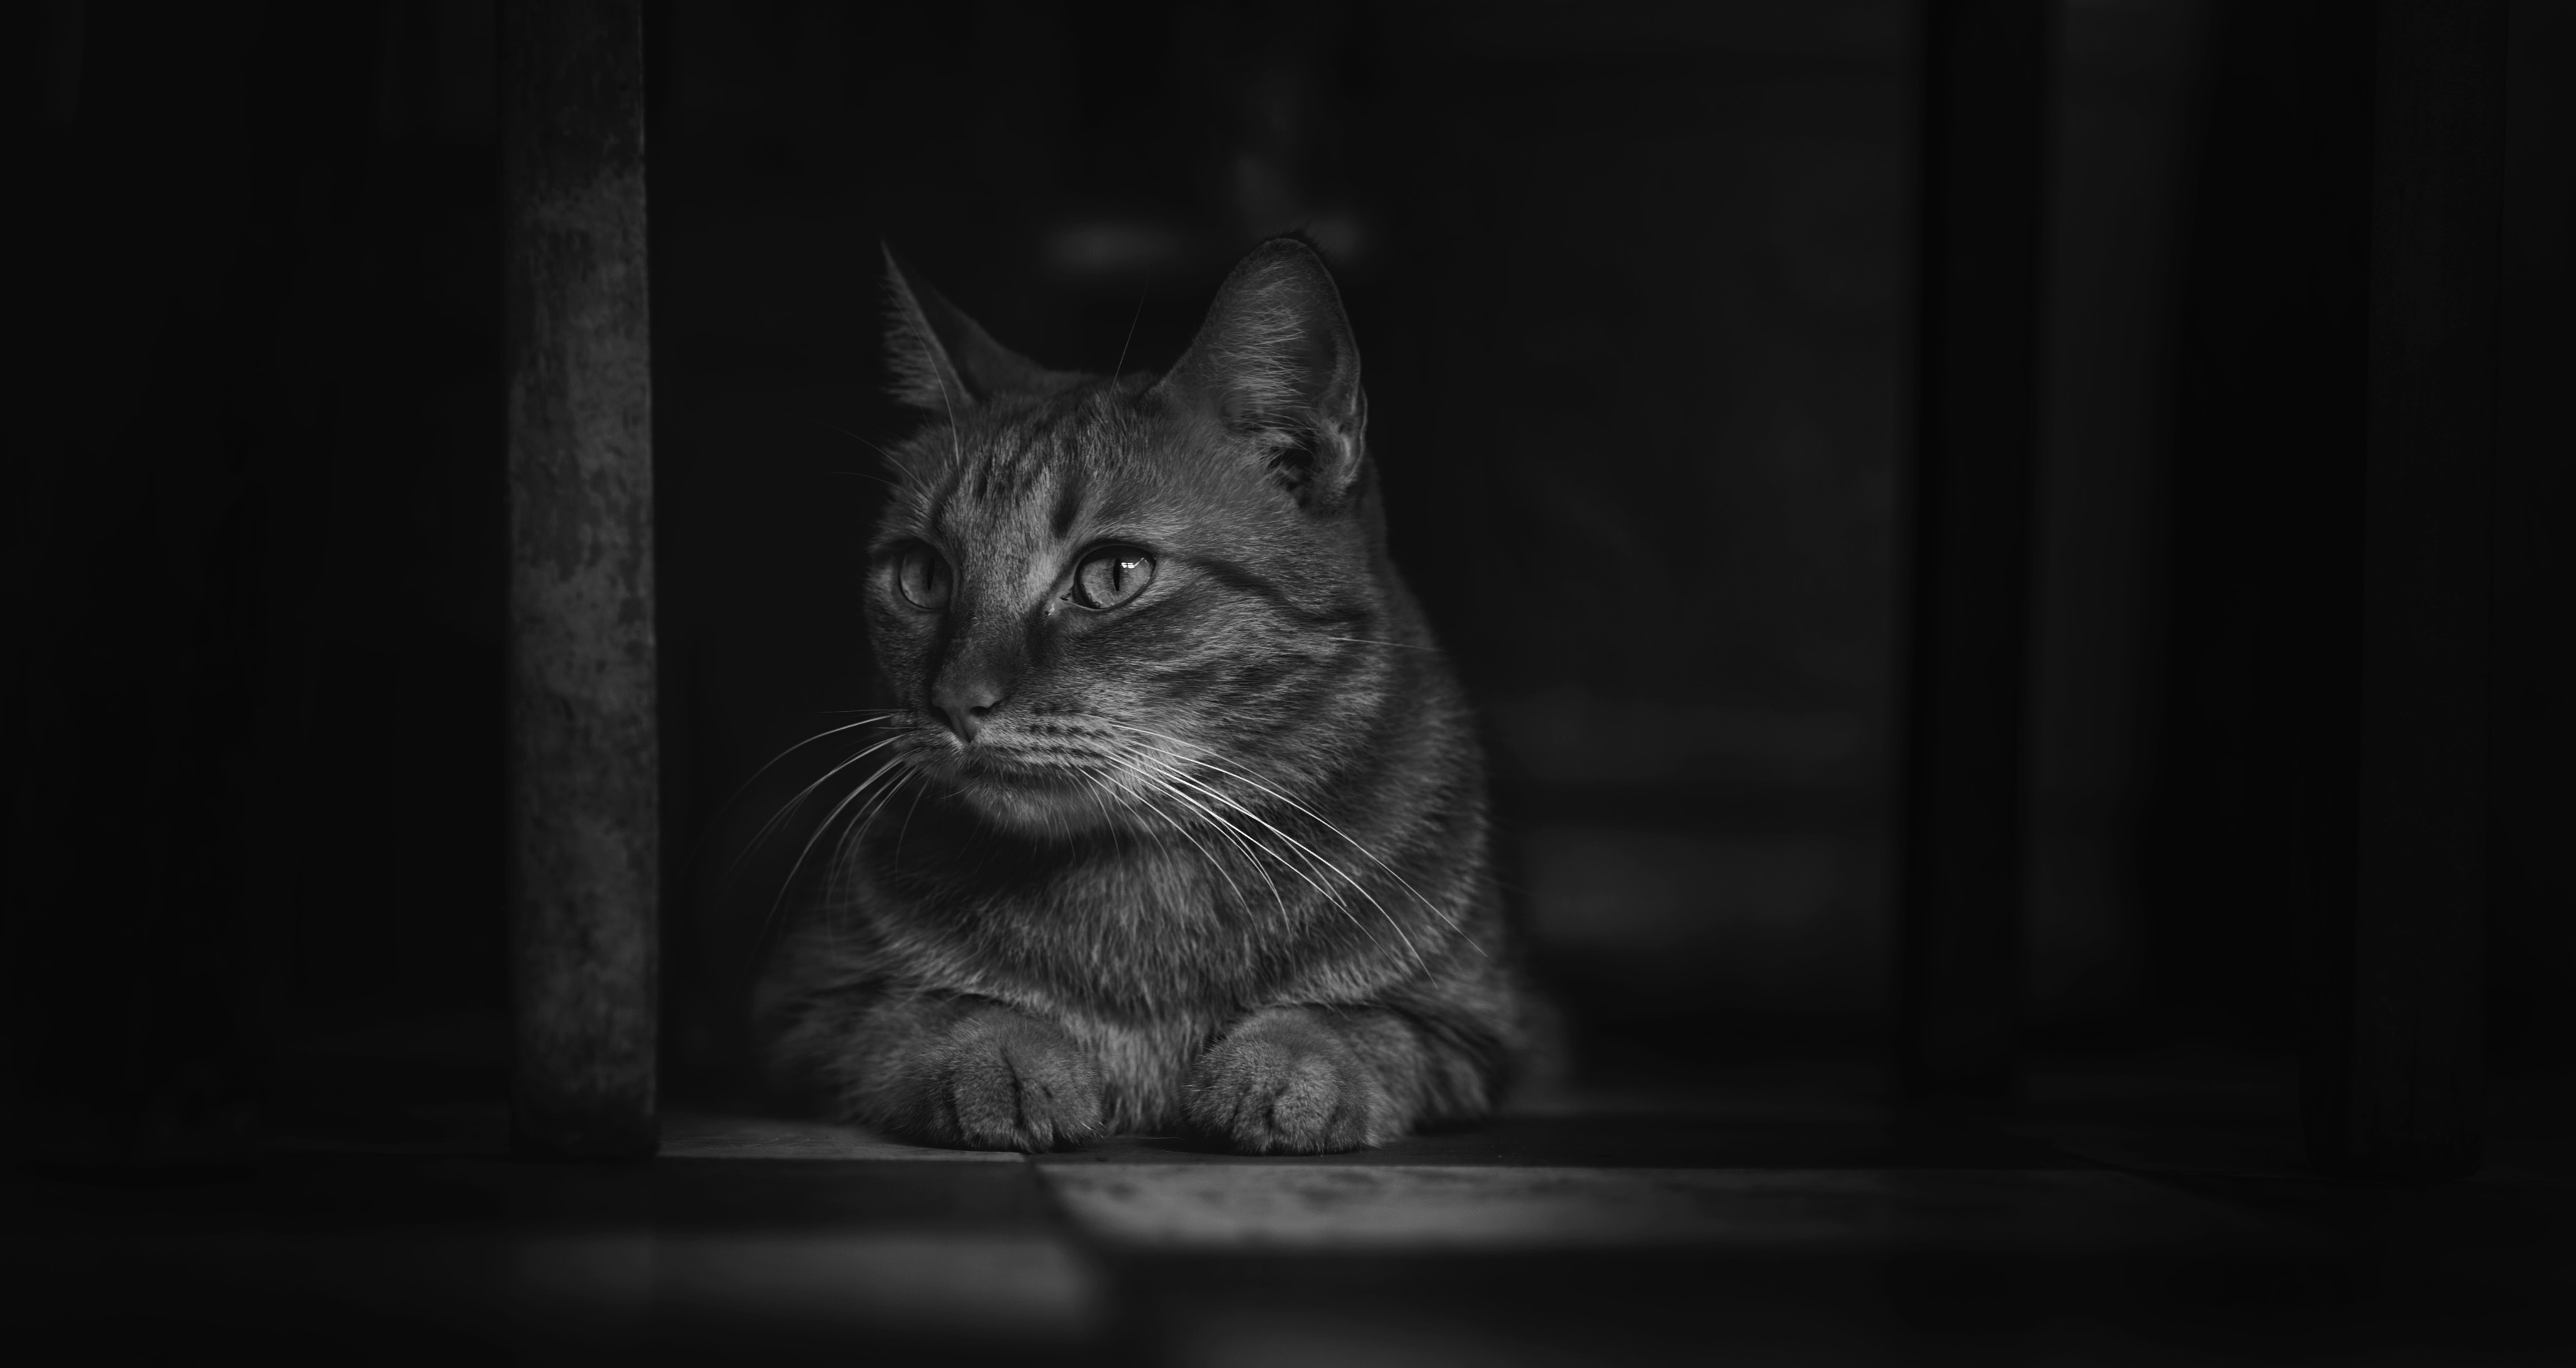 Monochrome photography of cat